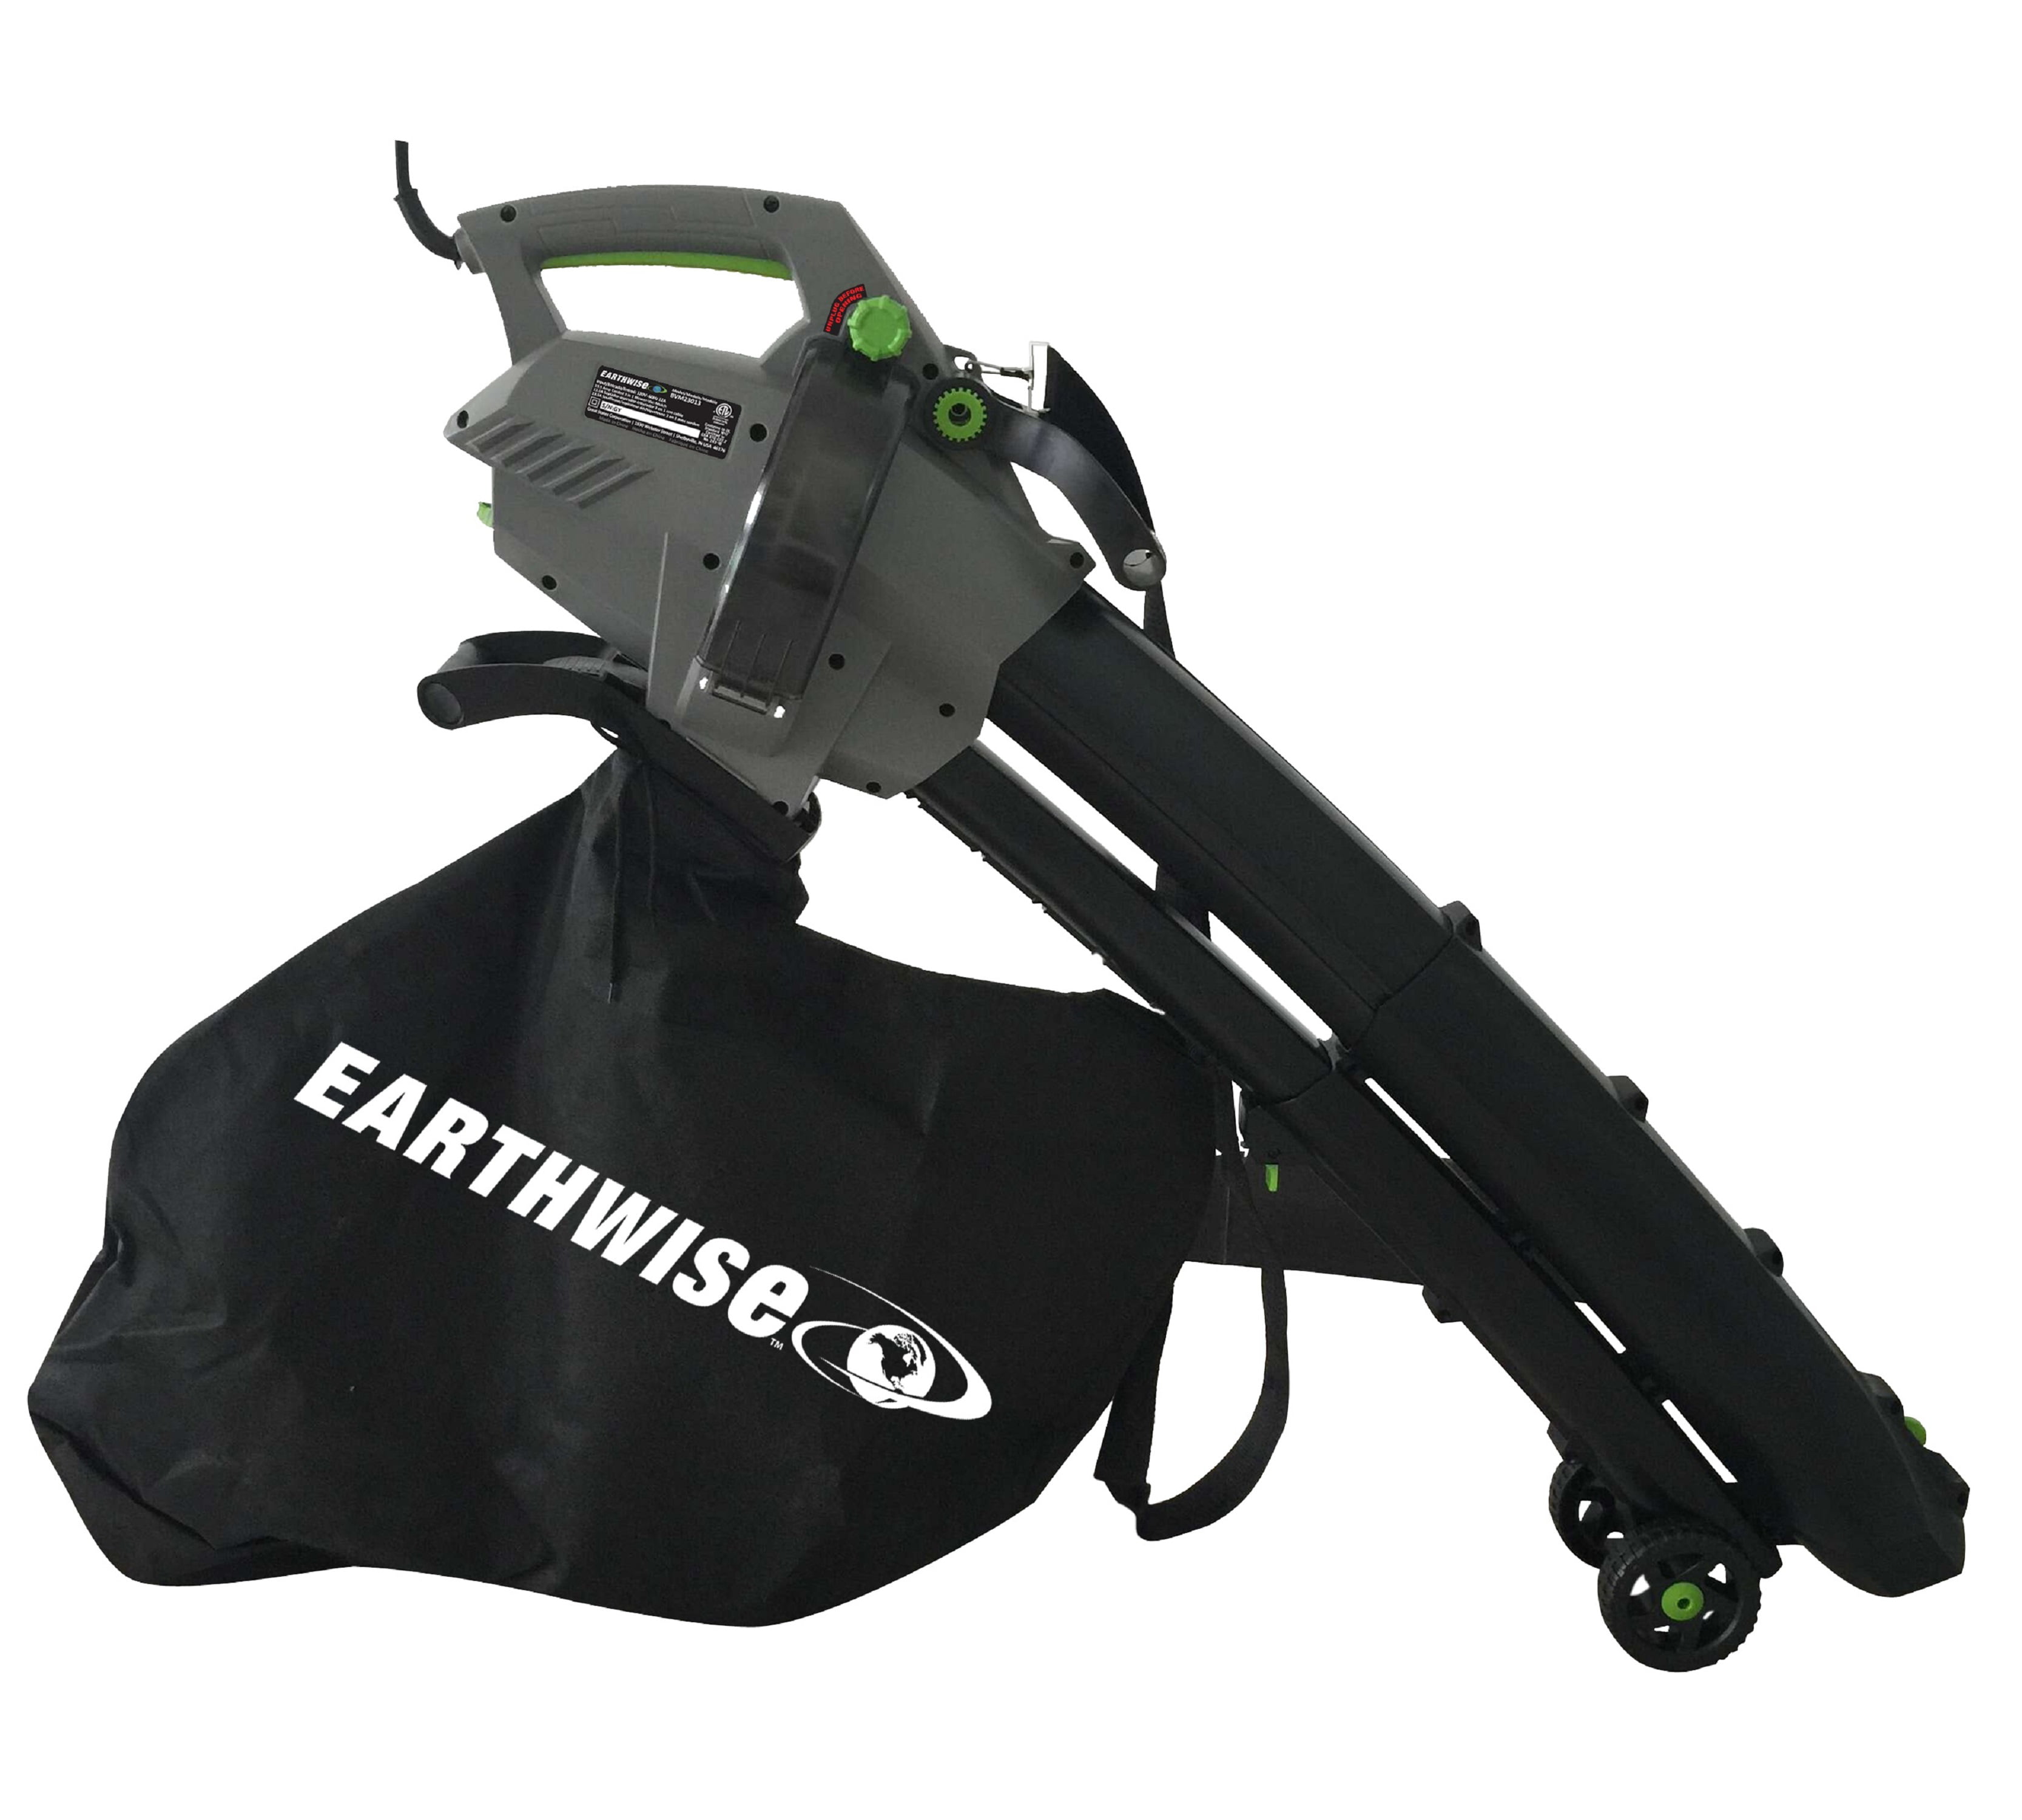 Earthwise Lbvm2202 Leaf Blower/mulcher/vacuum : Target